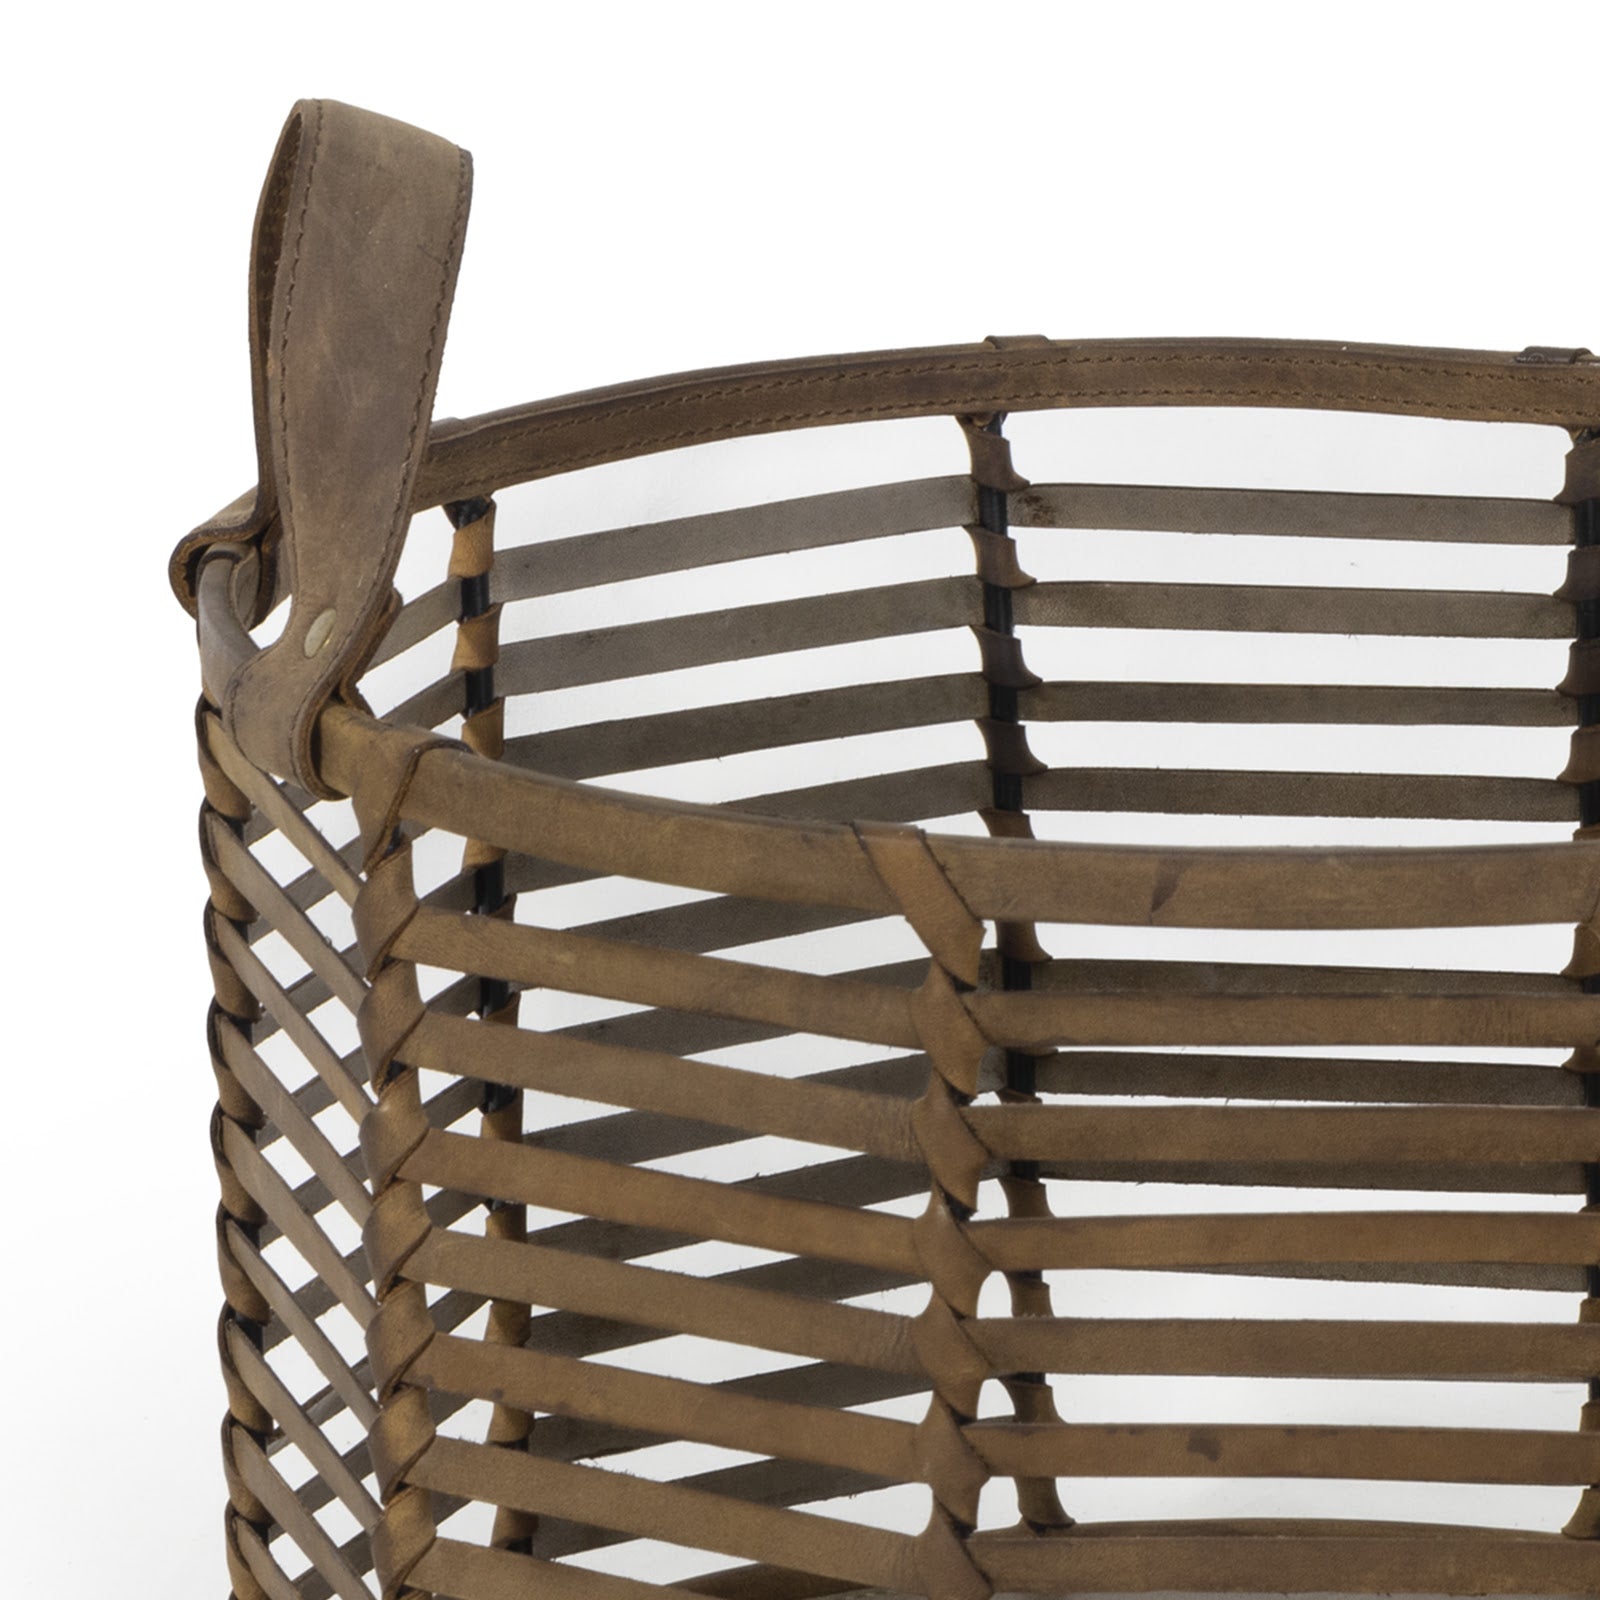 Regina Andrew Finn Leather Basket Small